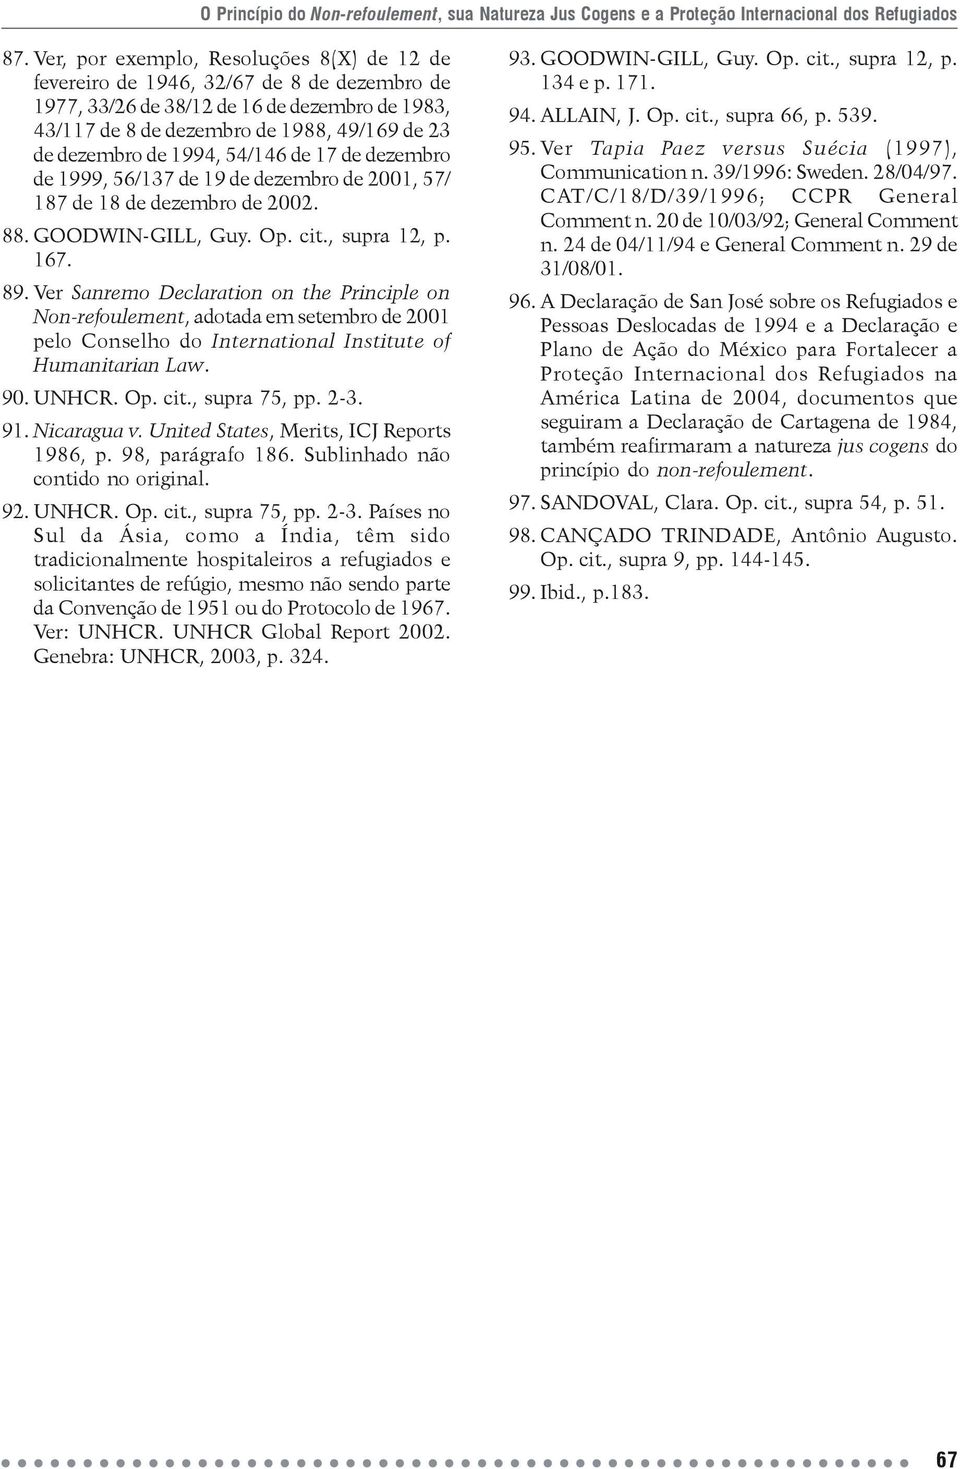 Ver Sanremo Declaration on the Principle on Non-refoulement, adotada em setembro de 2001 pelo Conselho do International Institute of Humanitarian Law. 90. UNHCR. Op. cit., supra 75, pp. 2-3. 91.